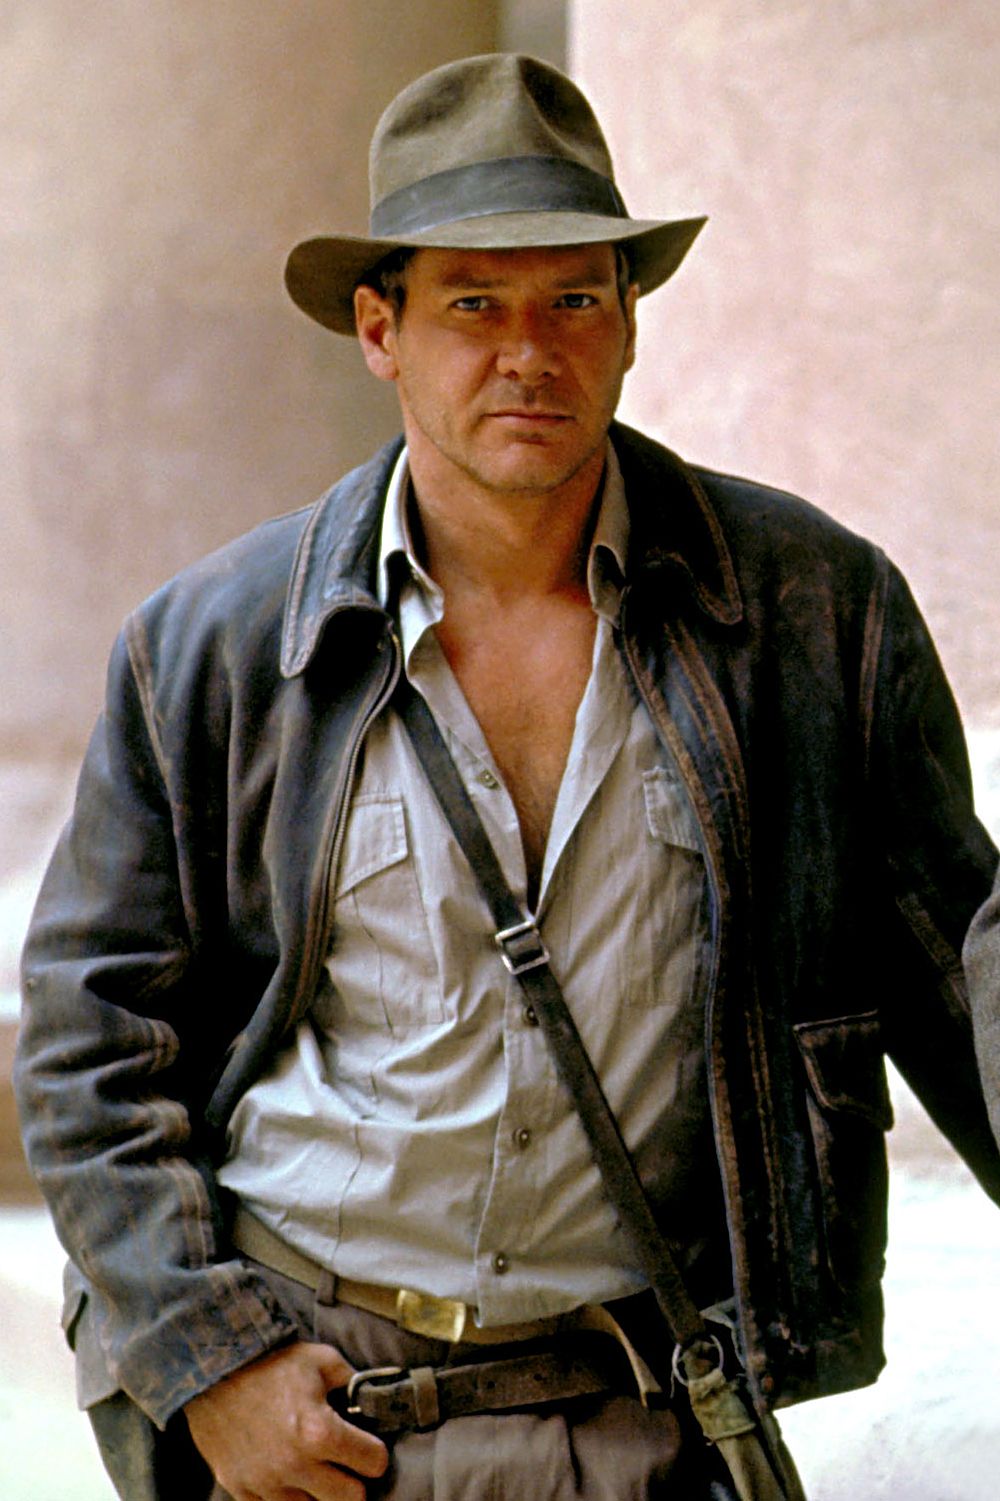 Harrison Cosplay Costume From Indiana Jones Filmes Indiana Jones